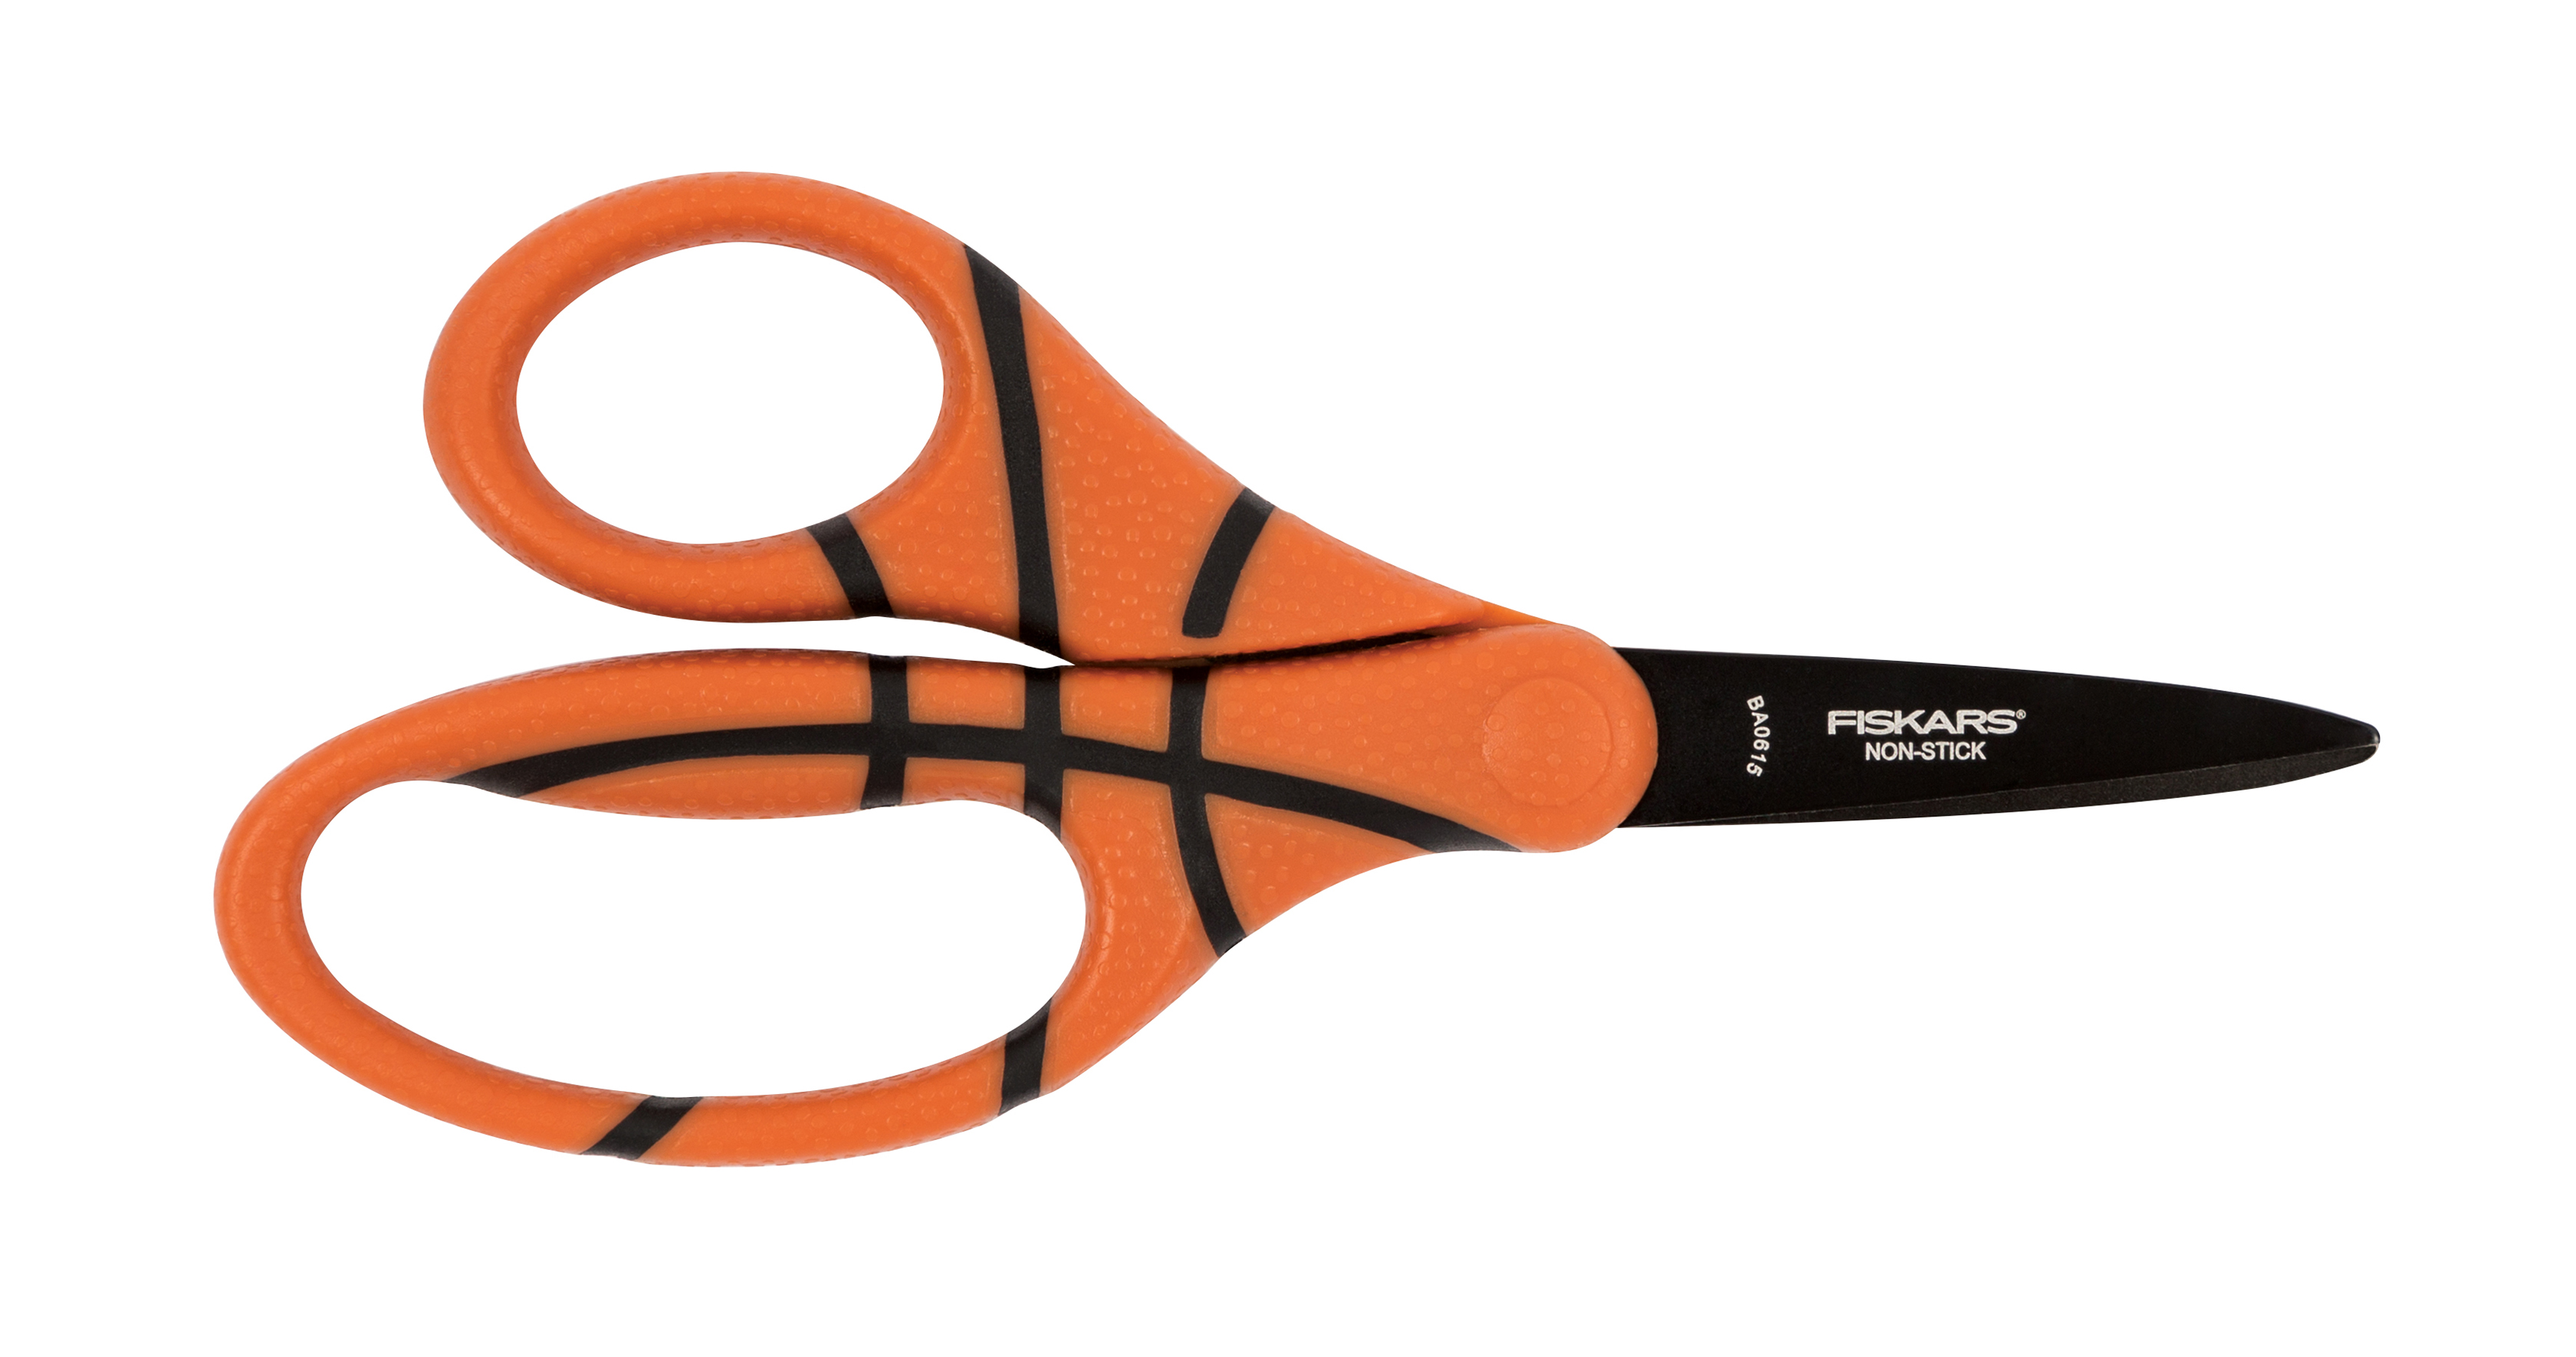 MVP Non-stick Pointed-tip Kids Scissors by Fiskars Brands Inc